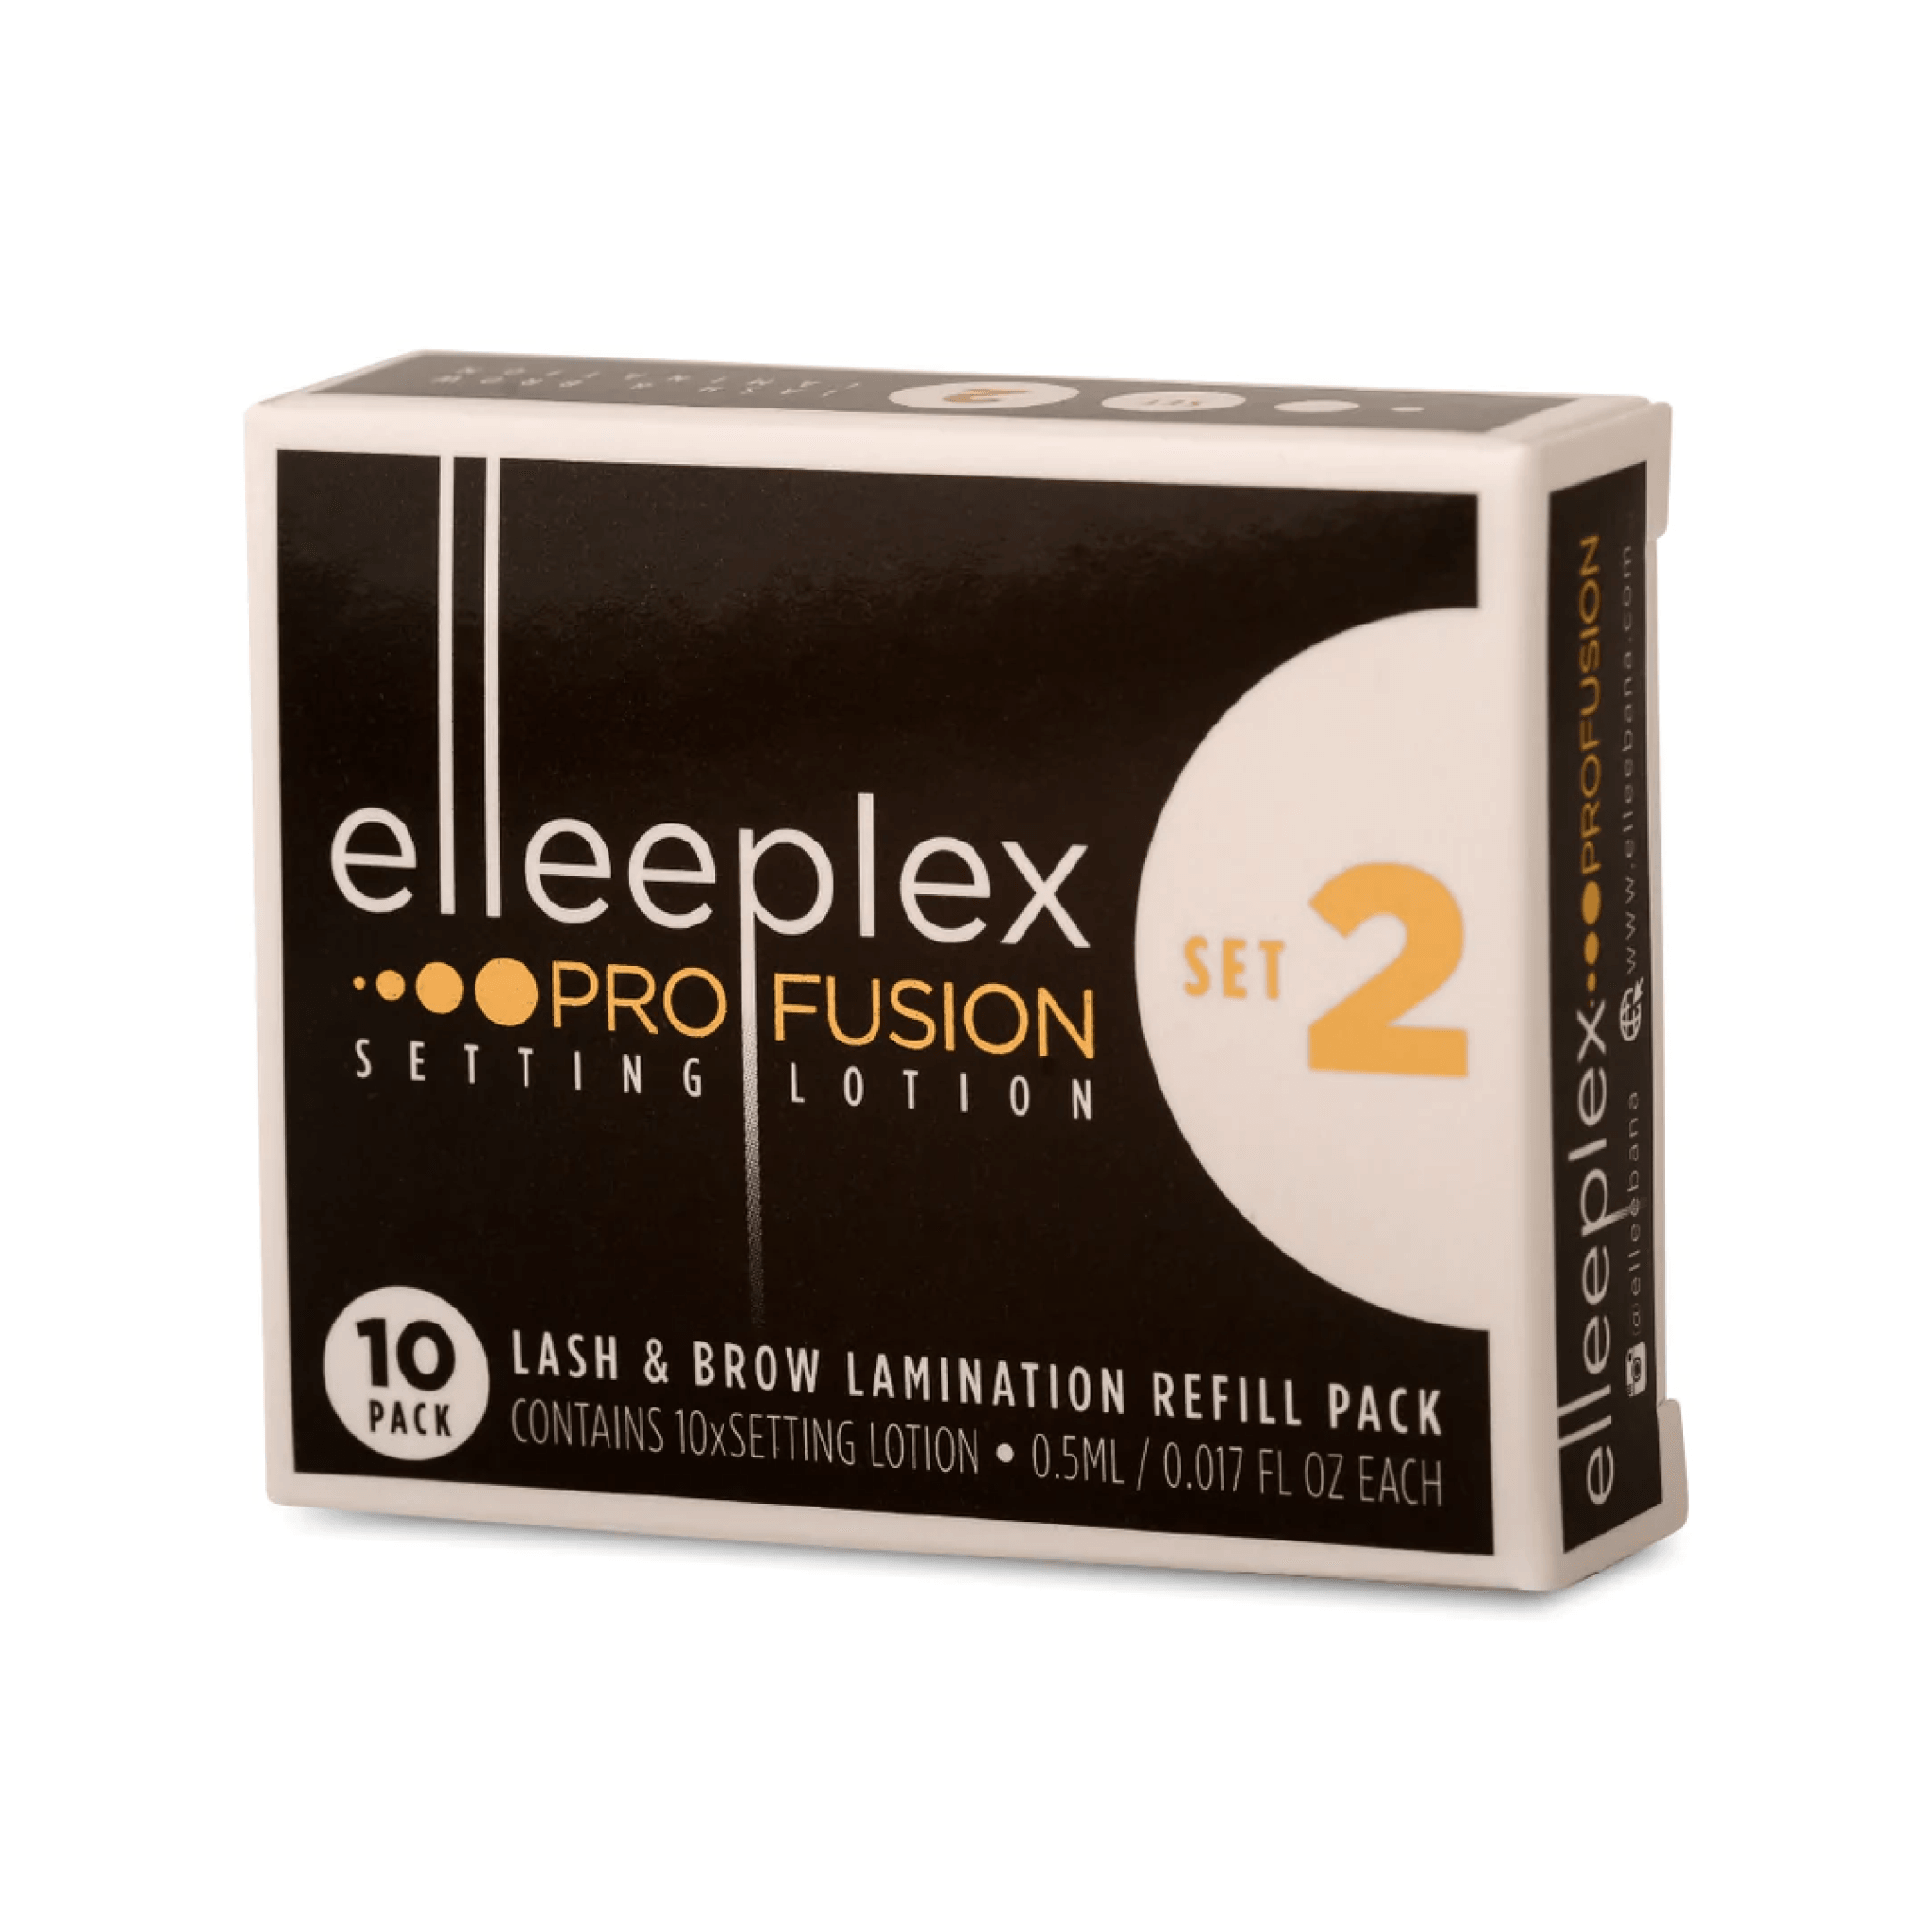 Elleebana Elleeplex Profusion - The Beauty House Shop